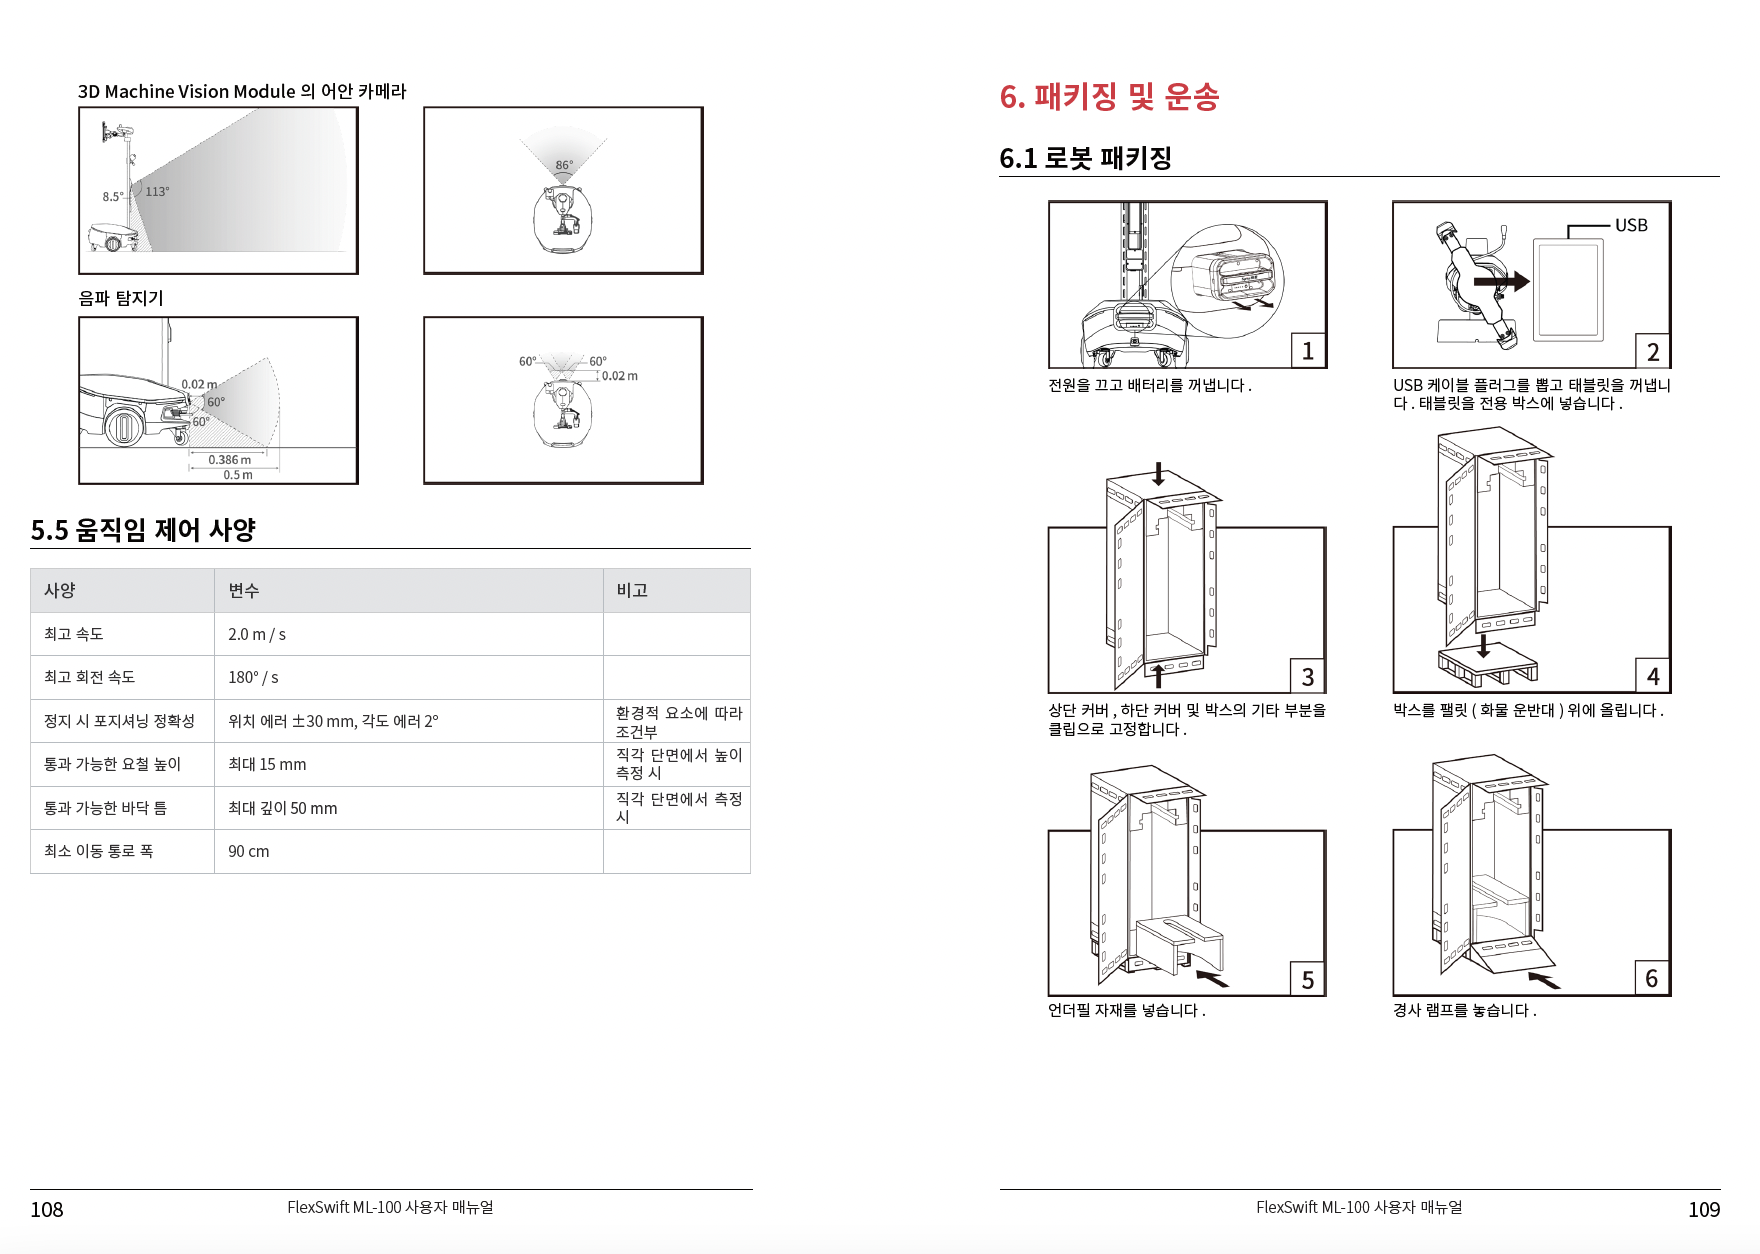 Syrius 물류로봇 FlexSwift 사용자 매뉴얼 한국어